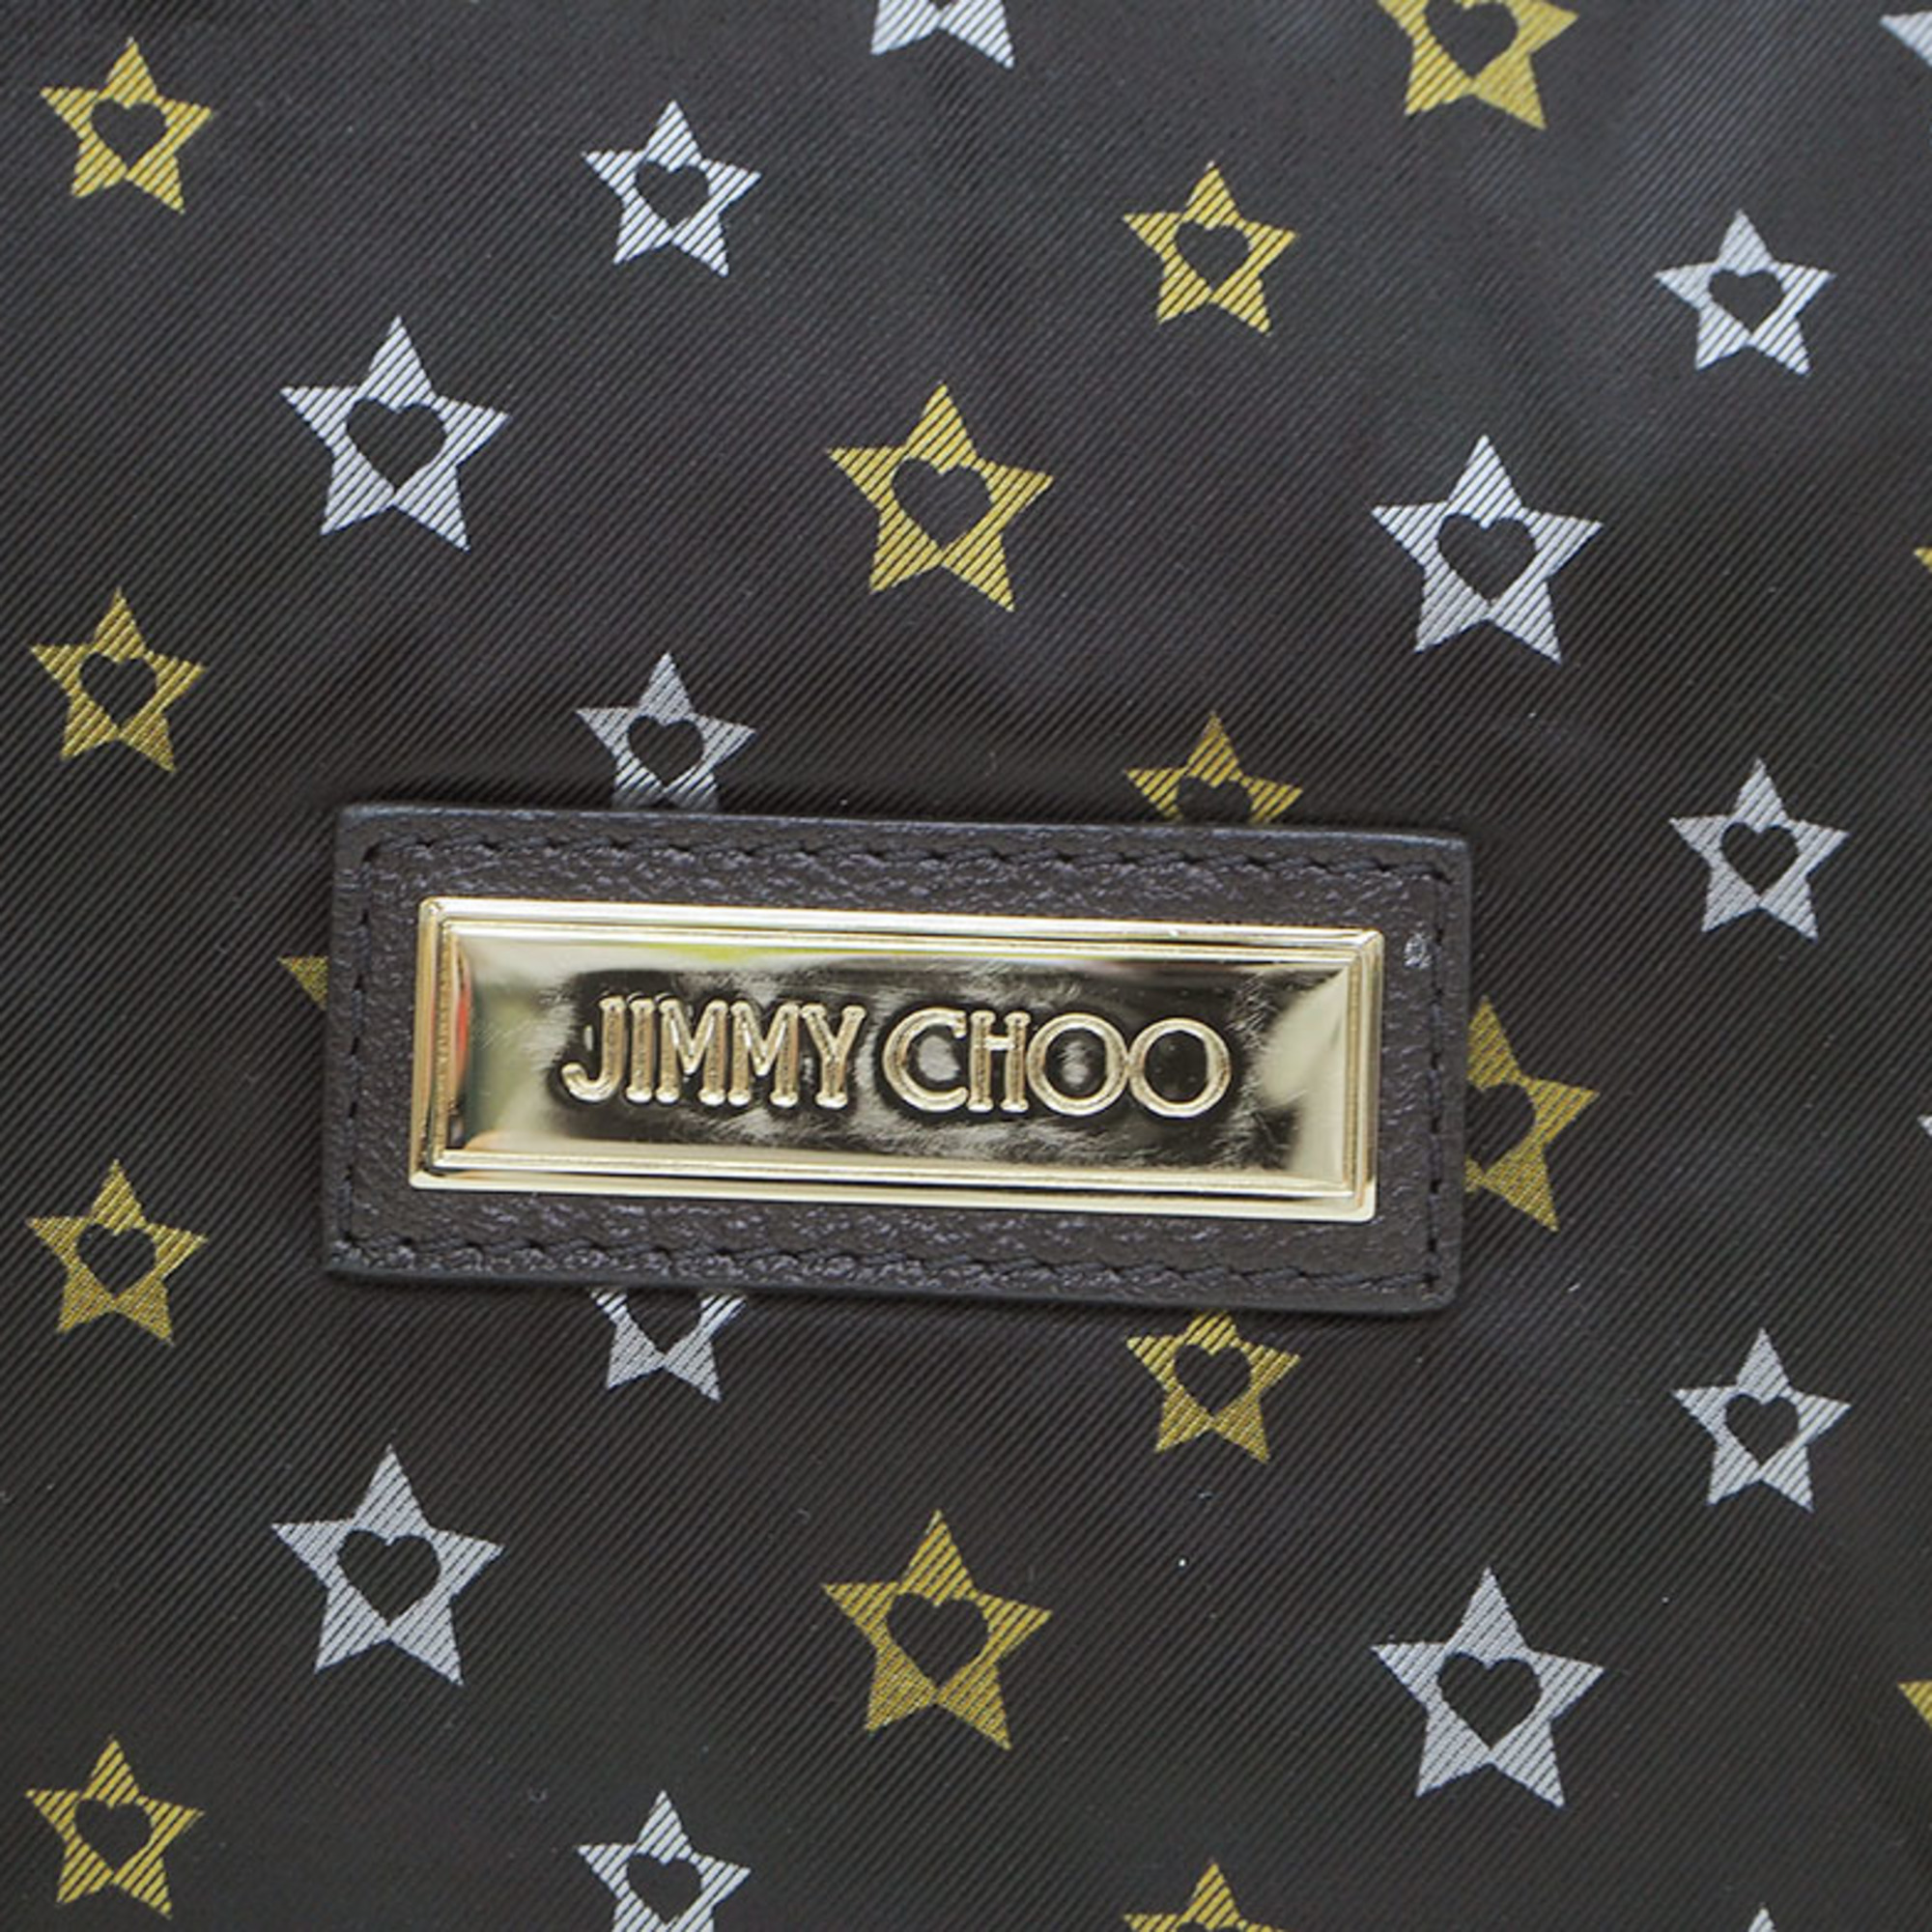 Jimmy Choo JIMMY CHOO Nylon Handbag Black Star Heart Extra Large Tote Bag Ladies